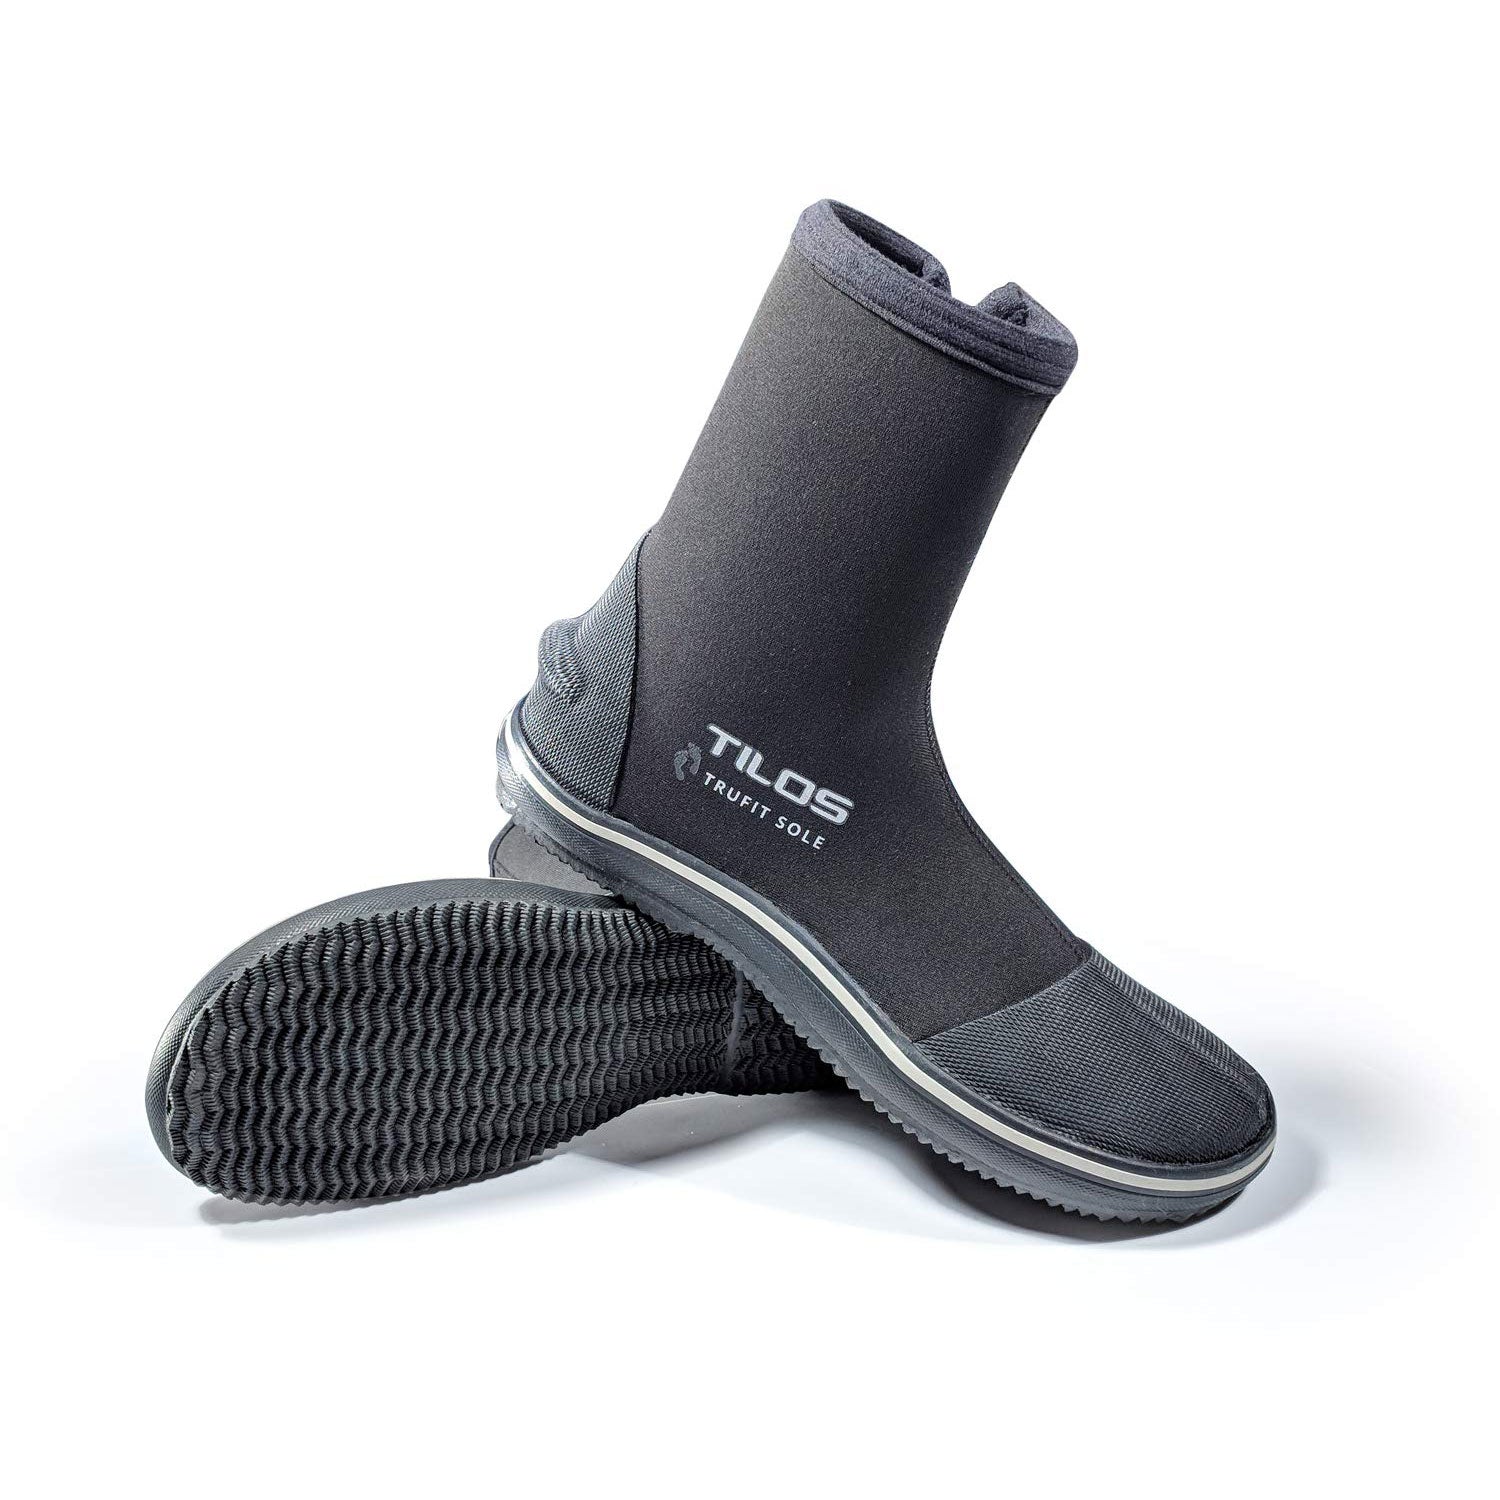 Tilos 5mm Trufit Rubber Toe Cap and Heel Boot - DIPNDIVE